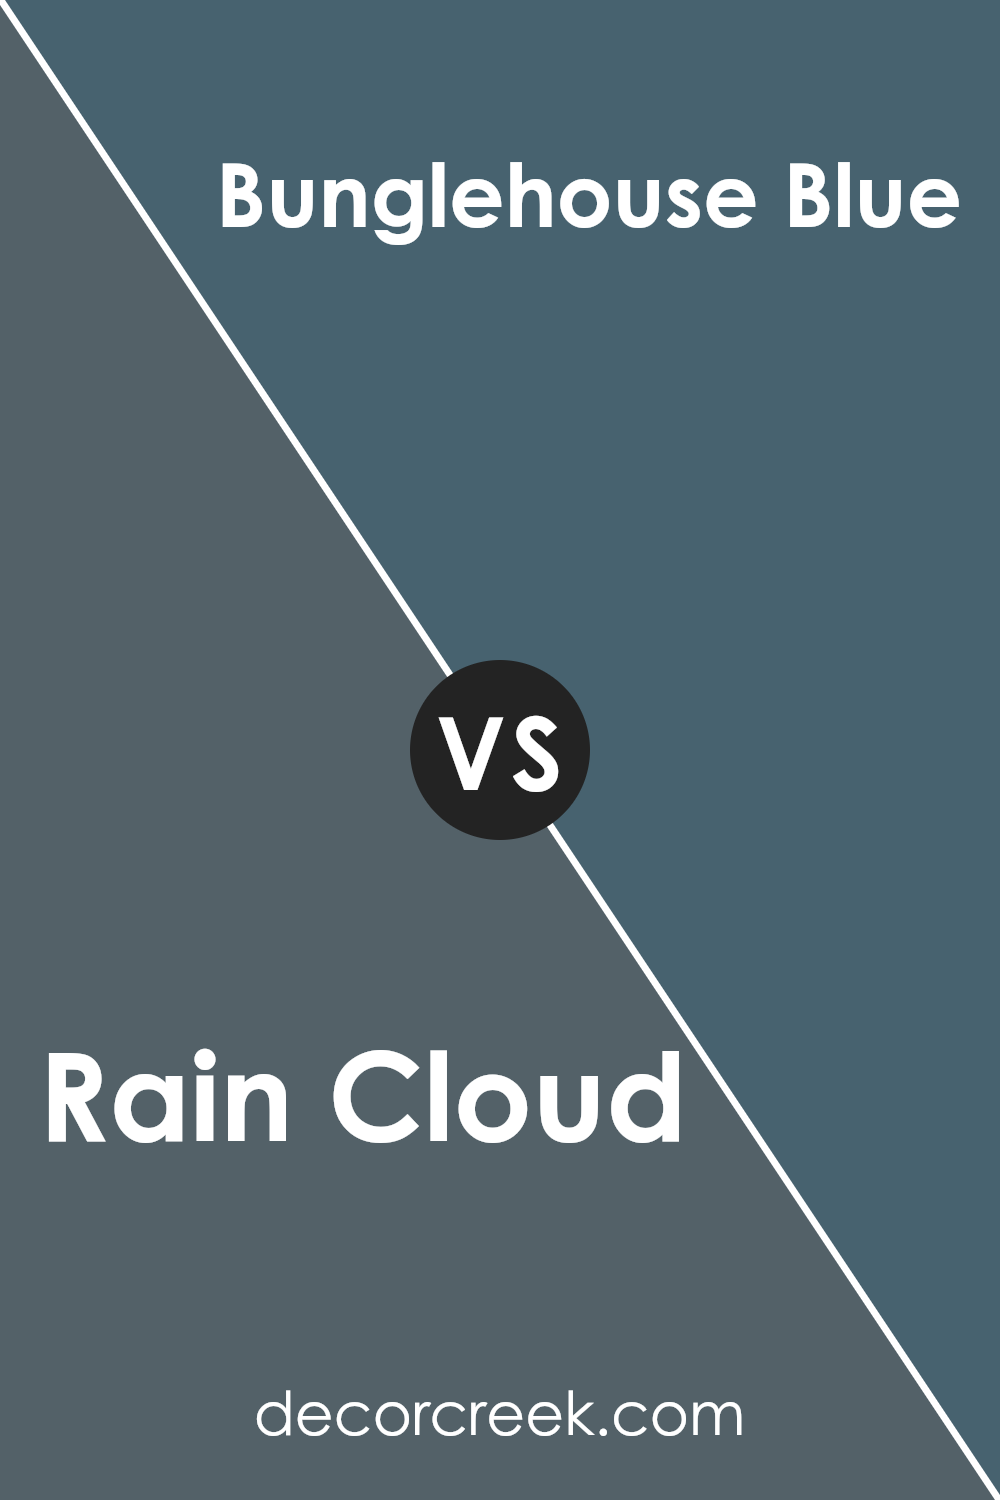 rain_cloud_sw_9639_vs_bunglehouse_blue_sw_0048